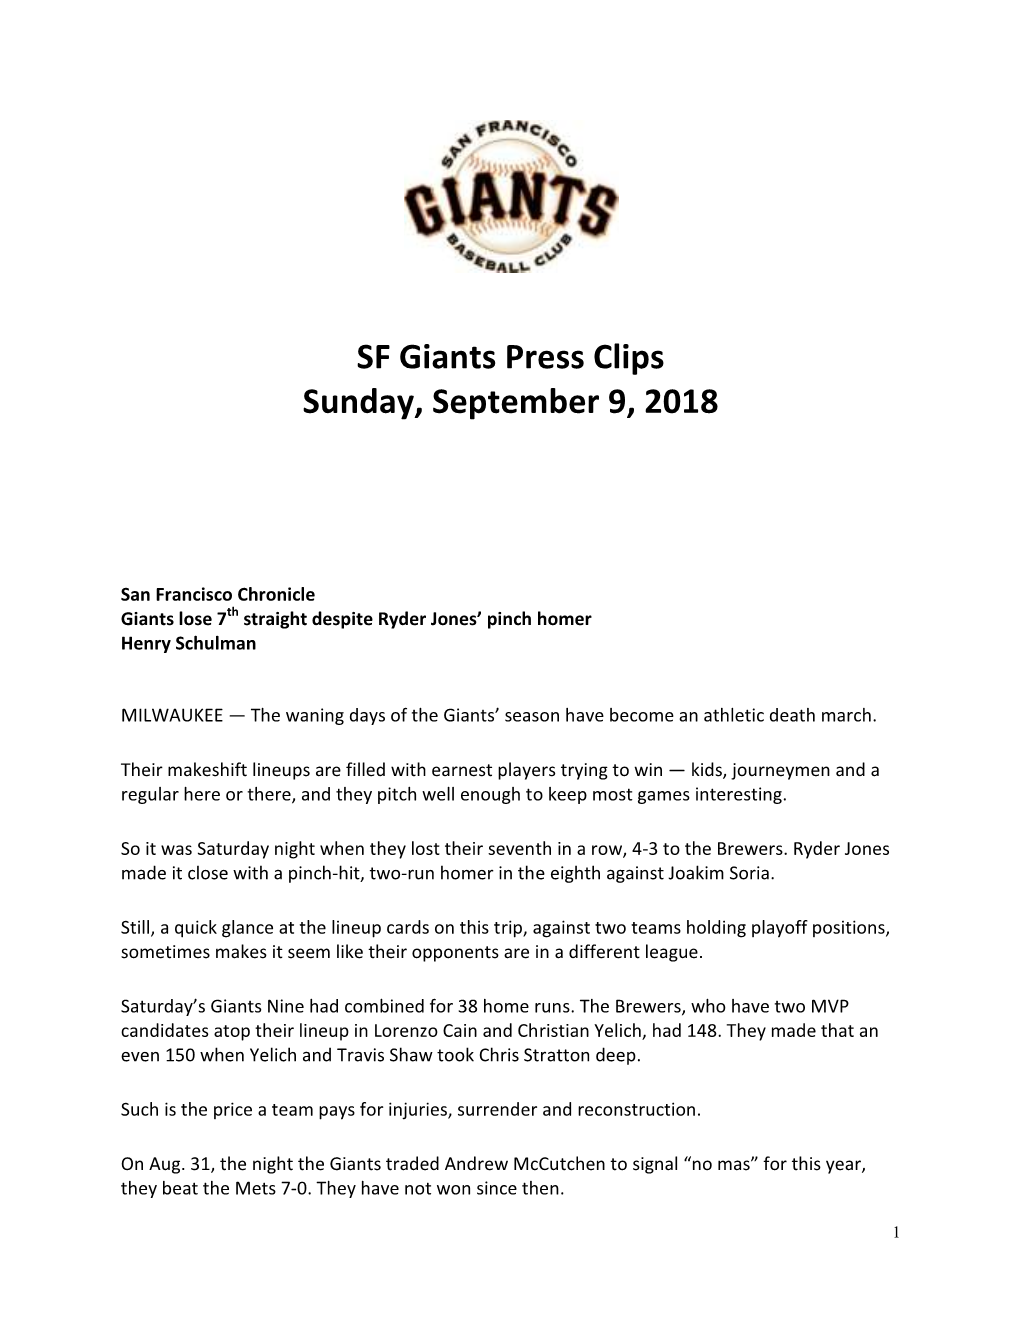 SF Giants Press Clips Sunday, September 9, 2018